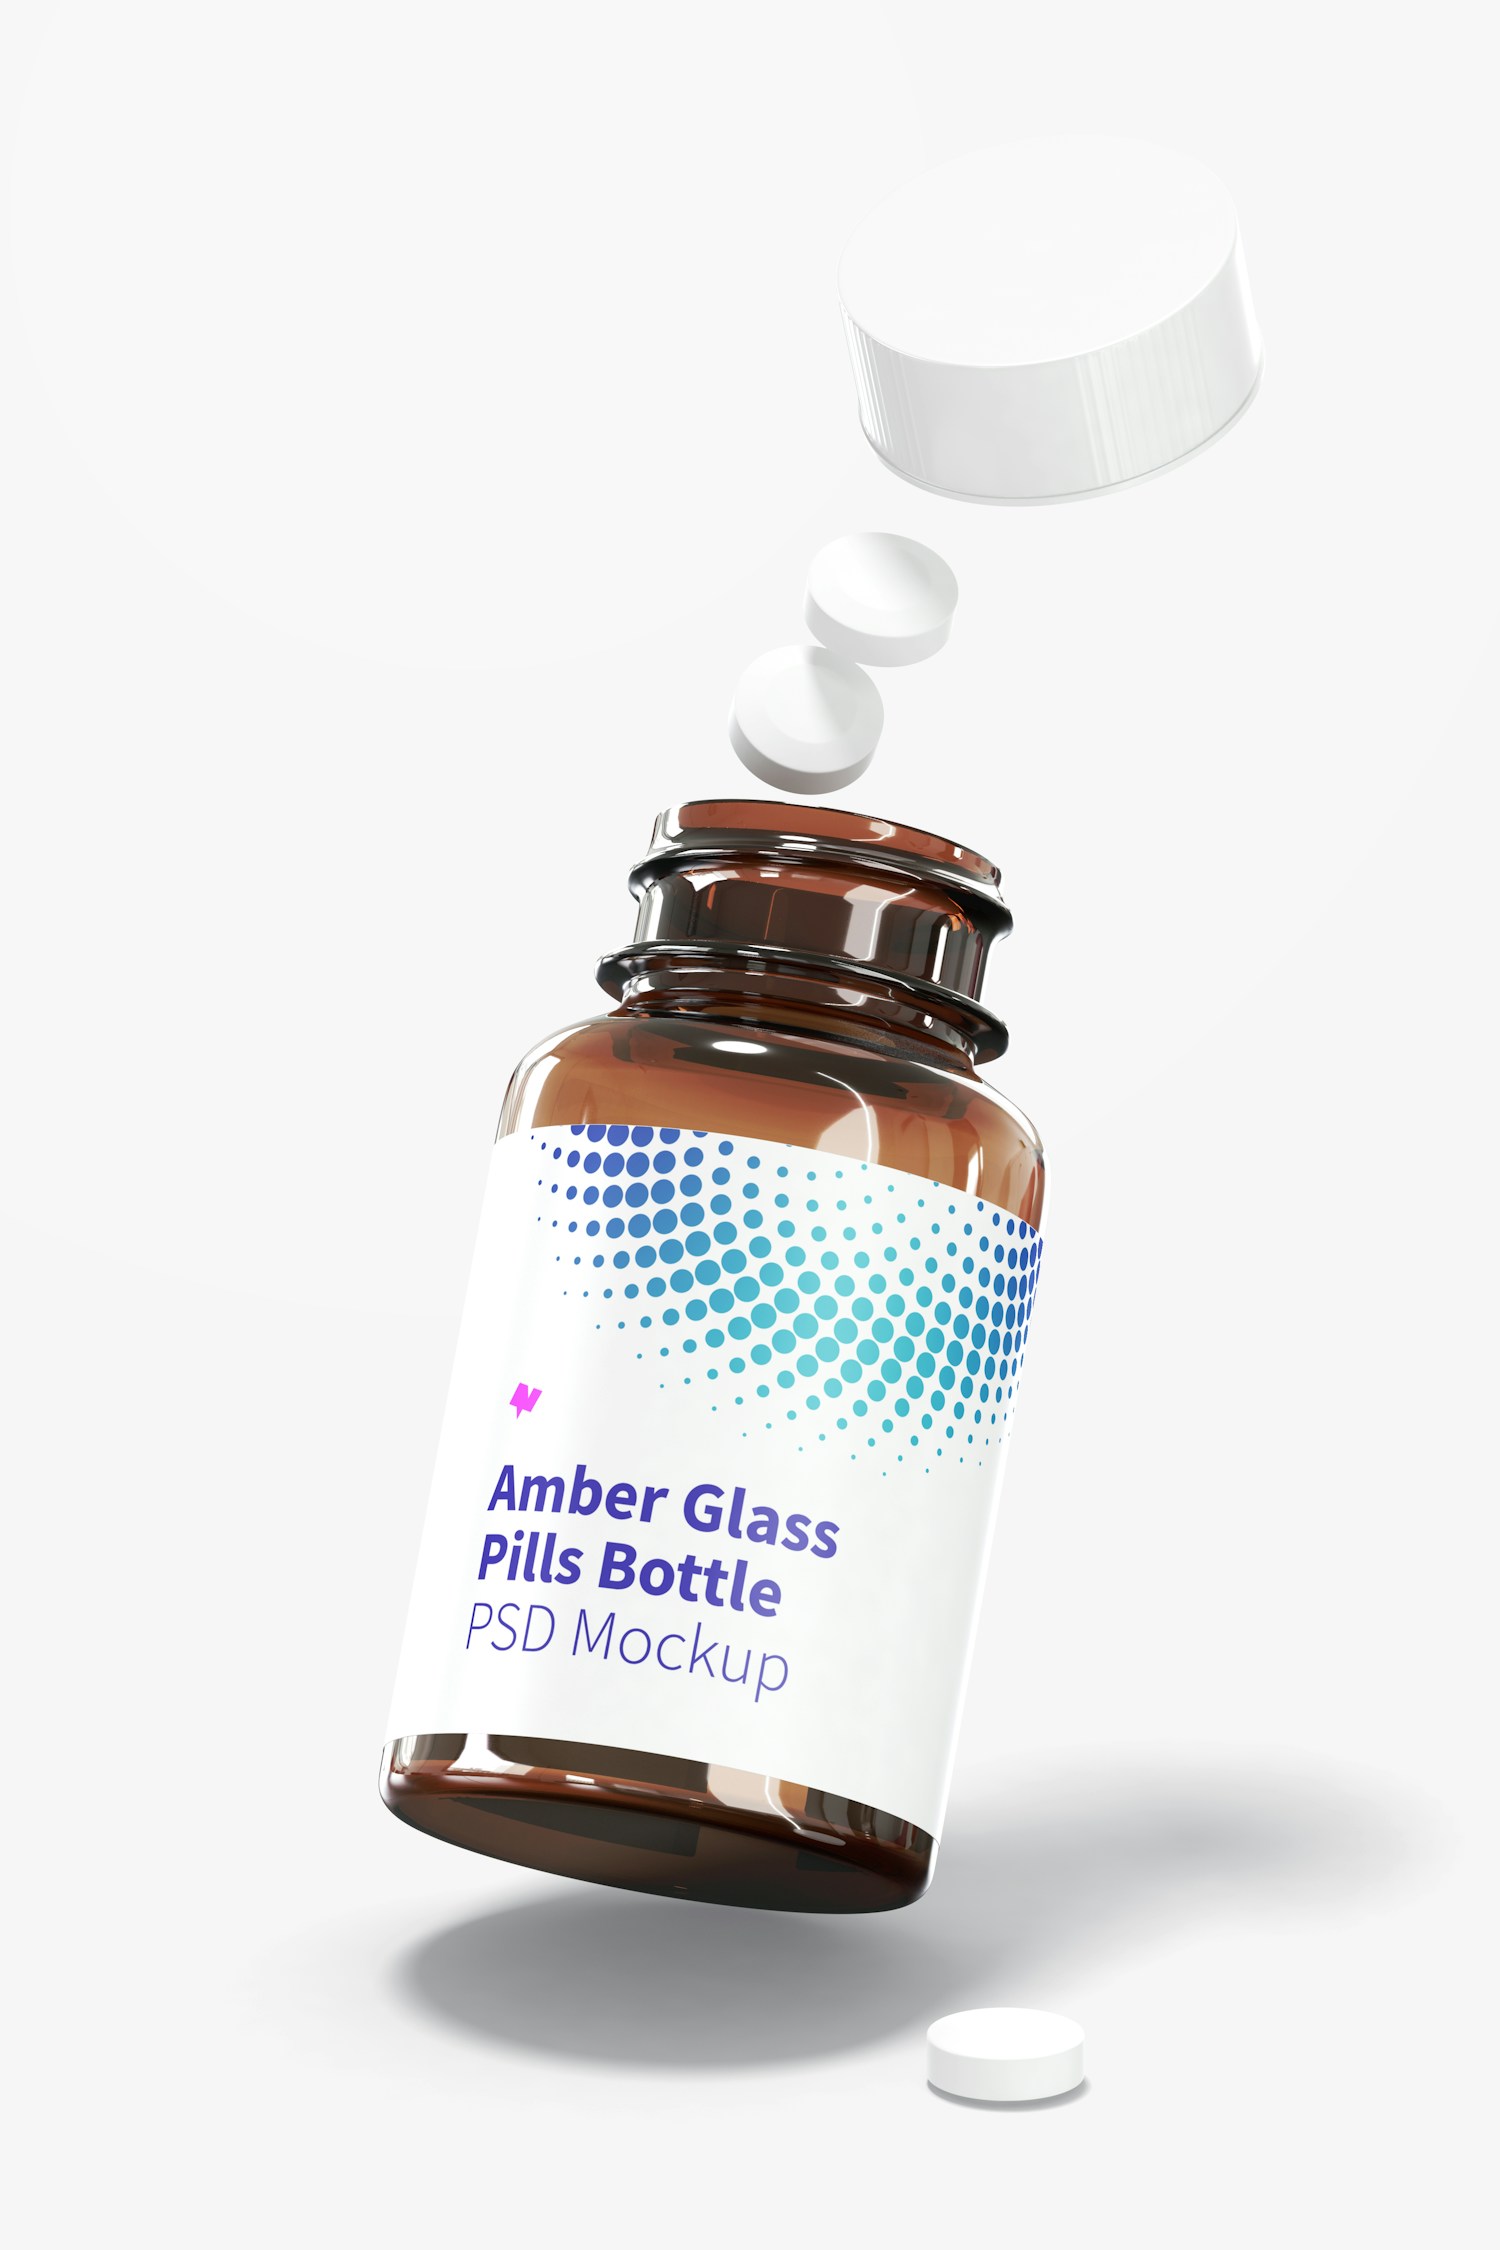 Amber Glass Pills Bottle Mockup, Falling